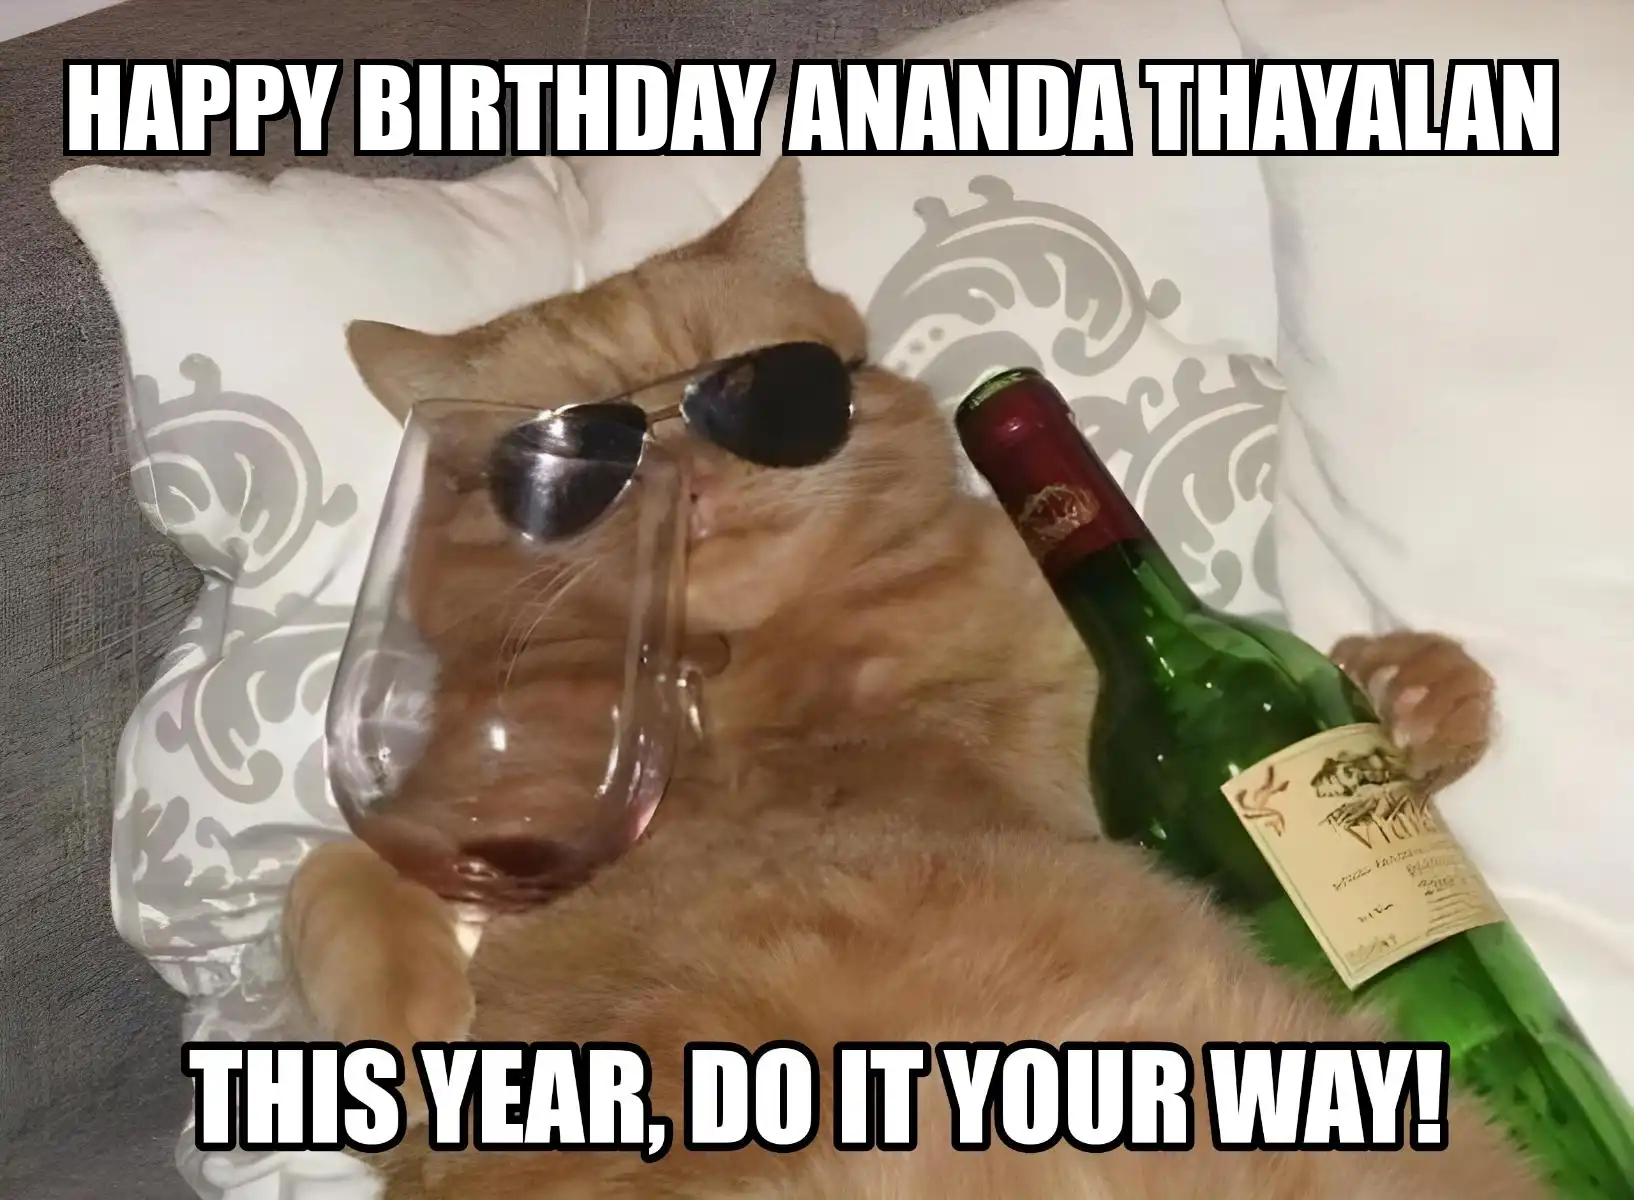 Happy Birthday Ananda thayalan This Year Do It Your Way Meme